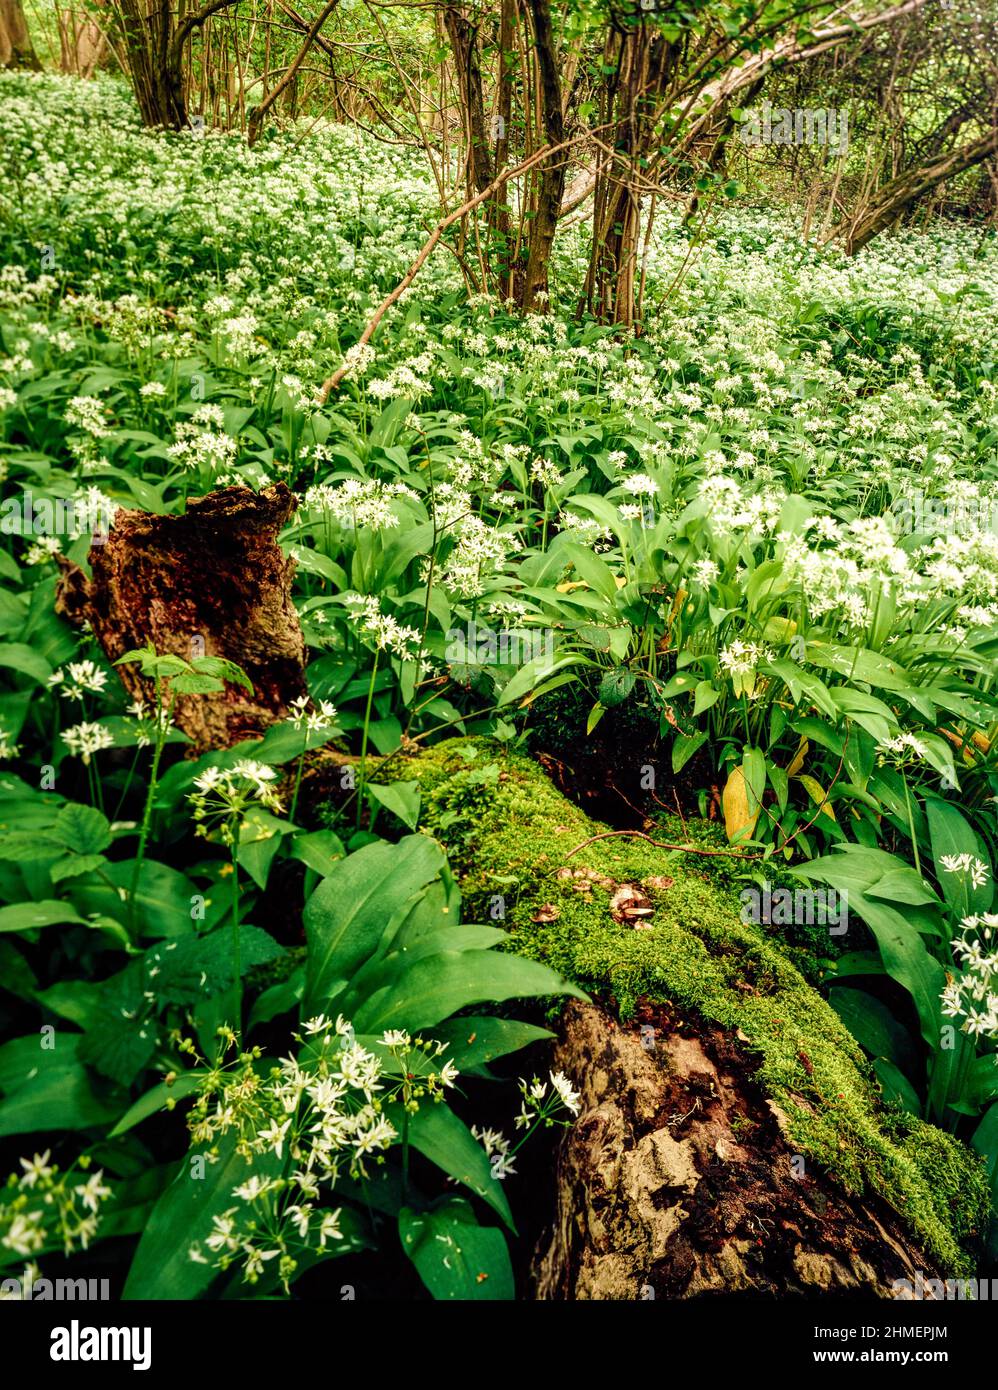 Wild forage food Allium ursinum, ramsons, buckrams, wild garlic, growing in open woodland in weak spring sunshine Stock Photo